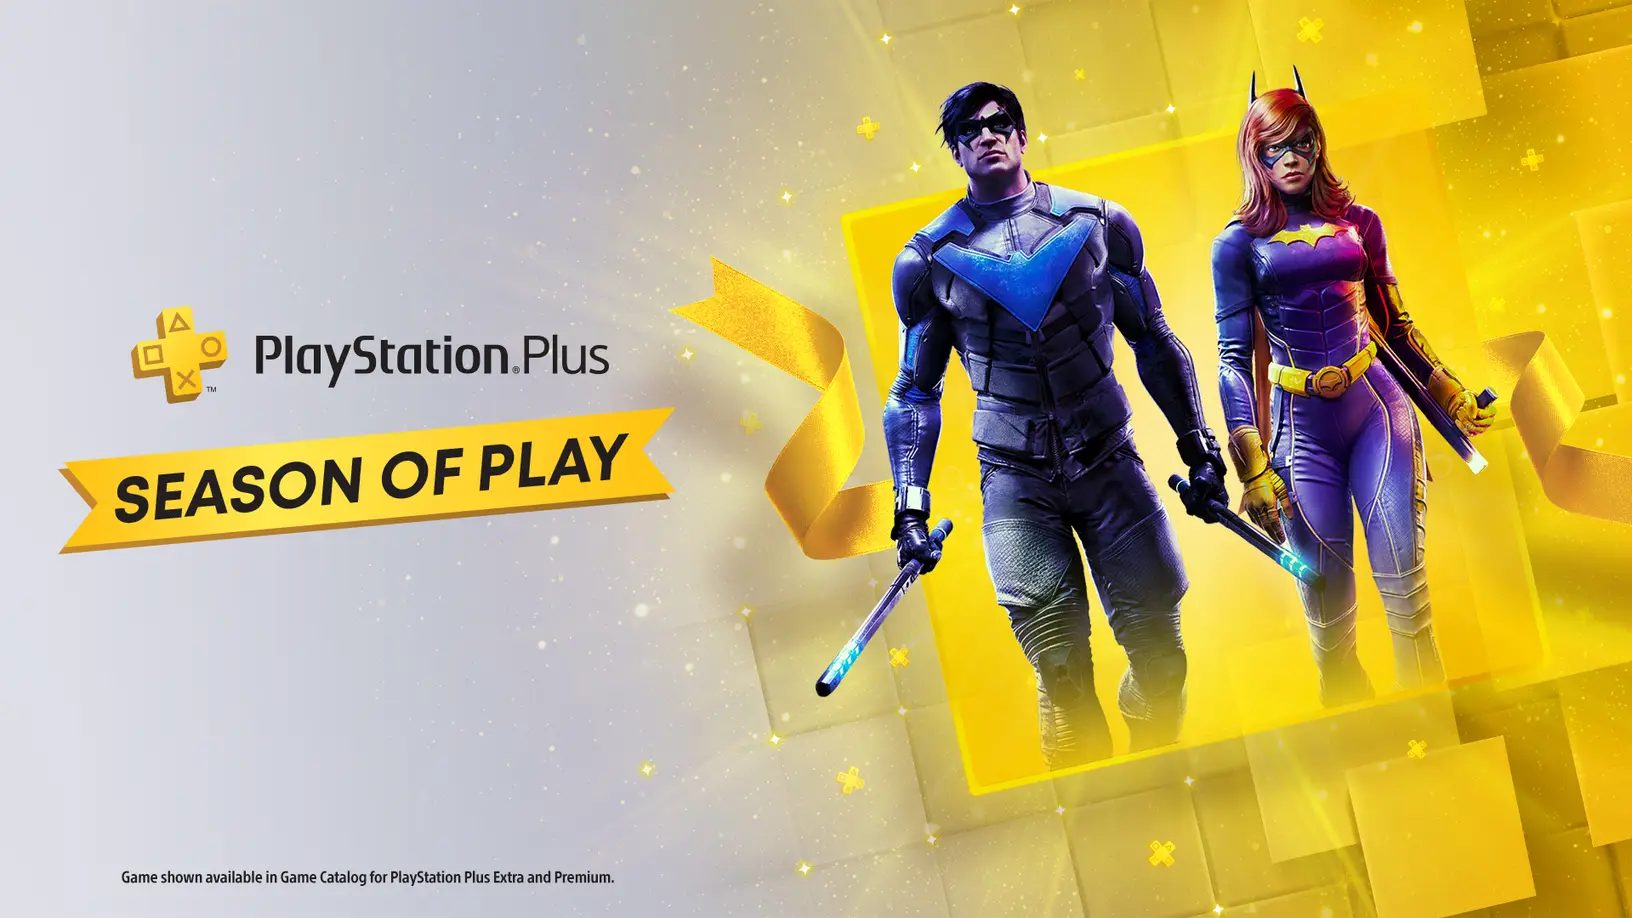 PlayStation Plus Season of Play jpeg